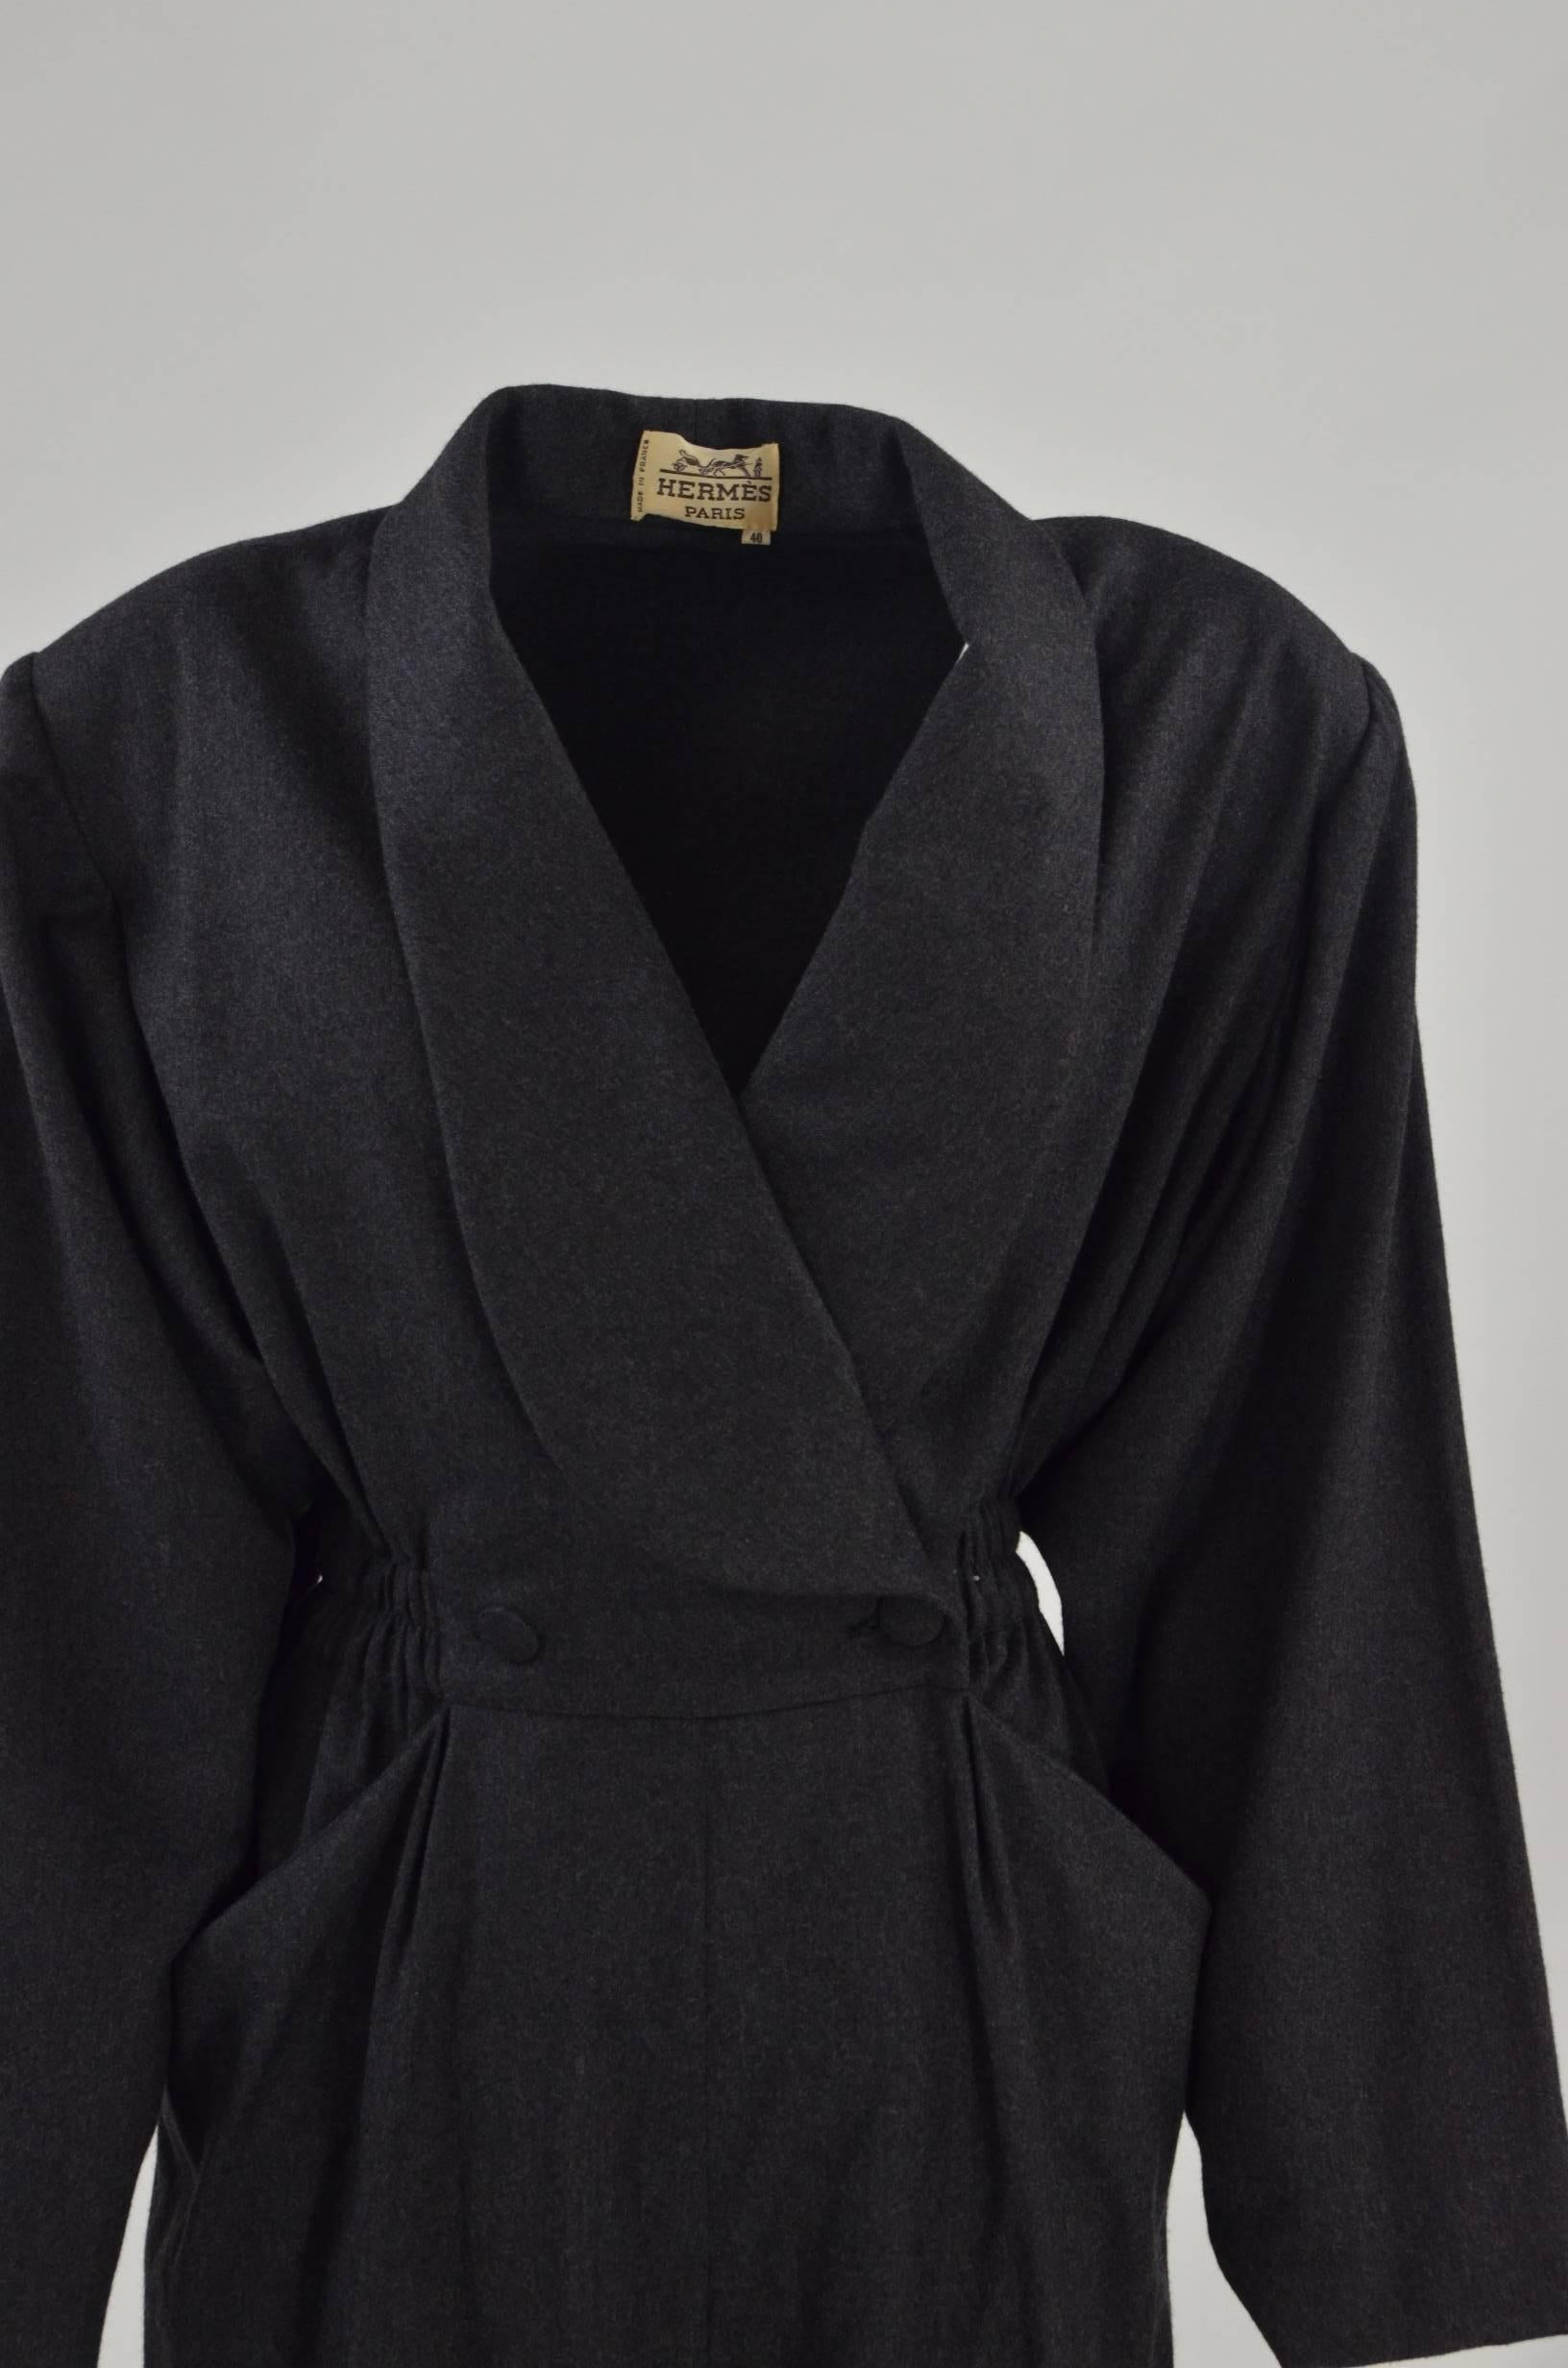 Women's 1980s Hermès Vintage Wool and Cashmere Dark Jumpsuit